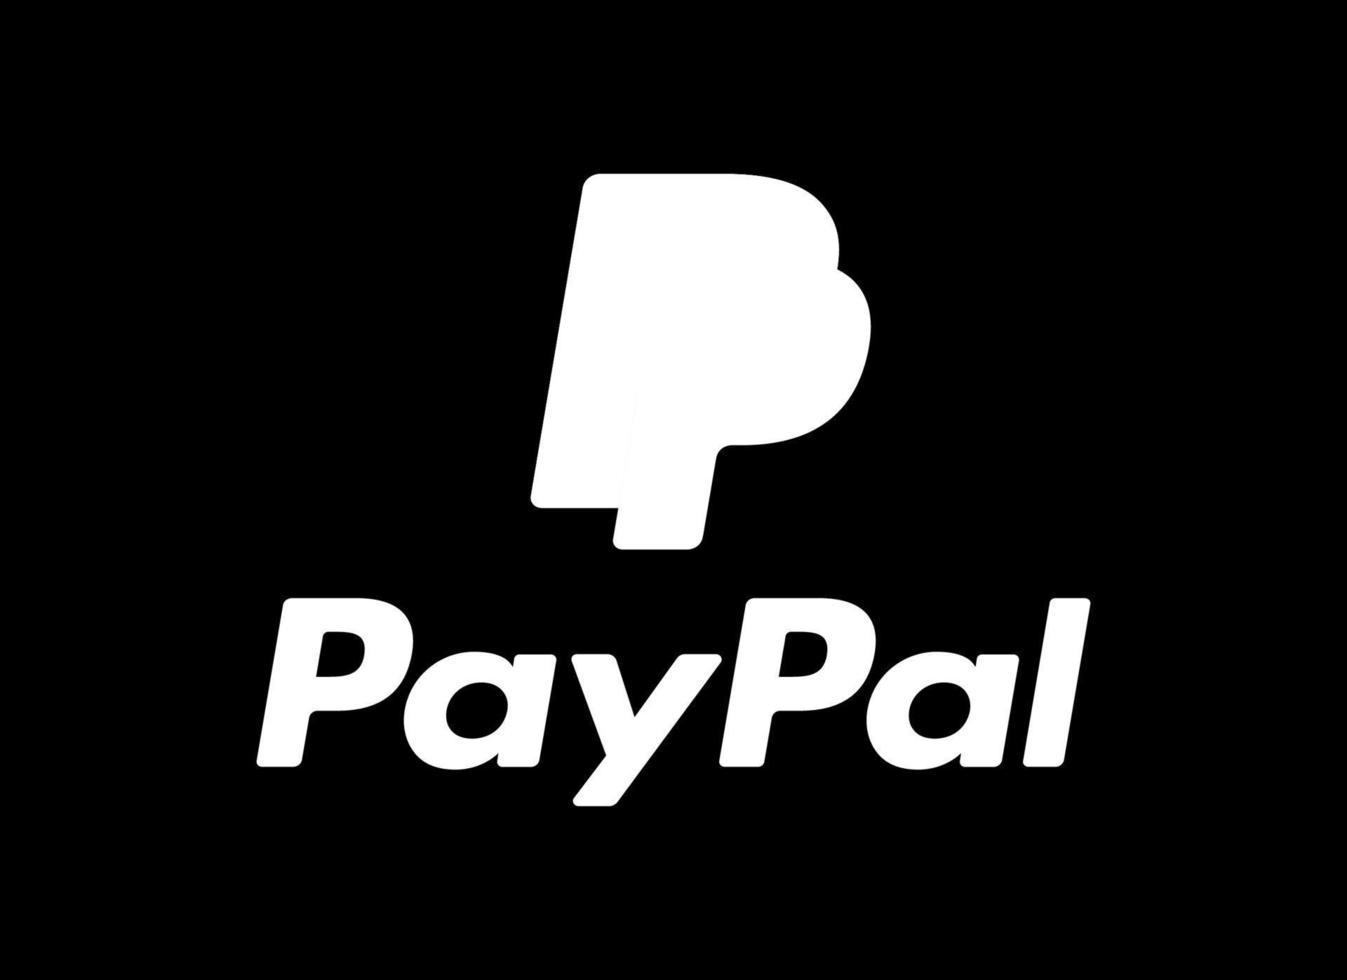 PayPal logotyp vektor, PayPal logotyp fri vektor